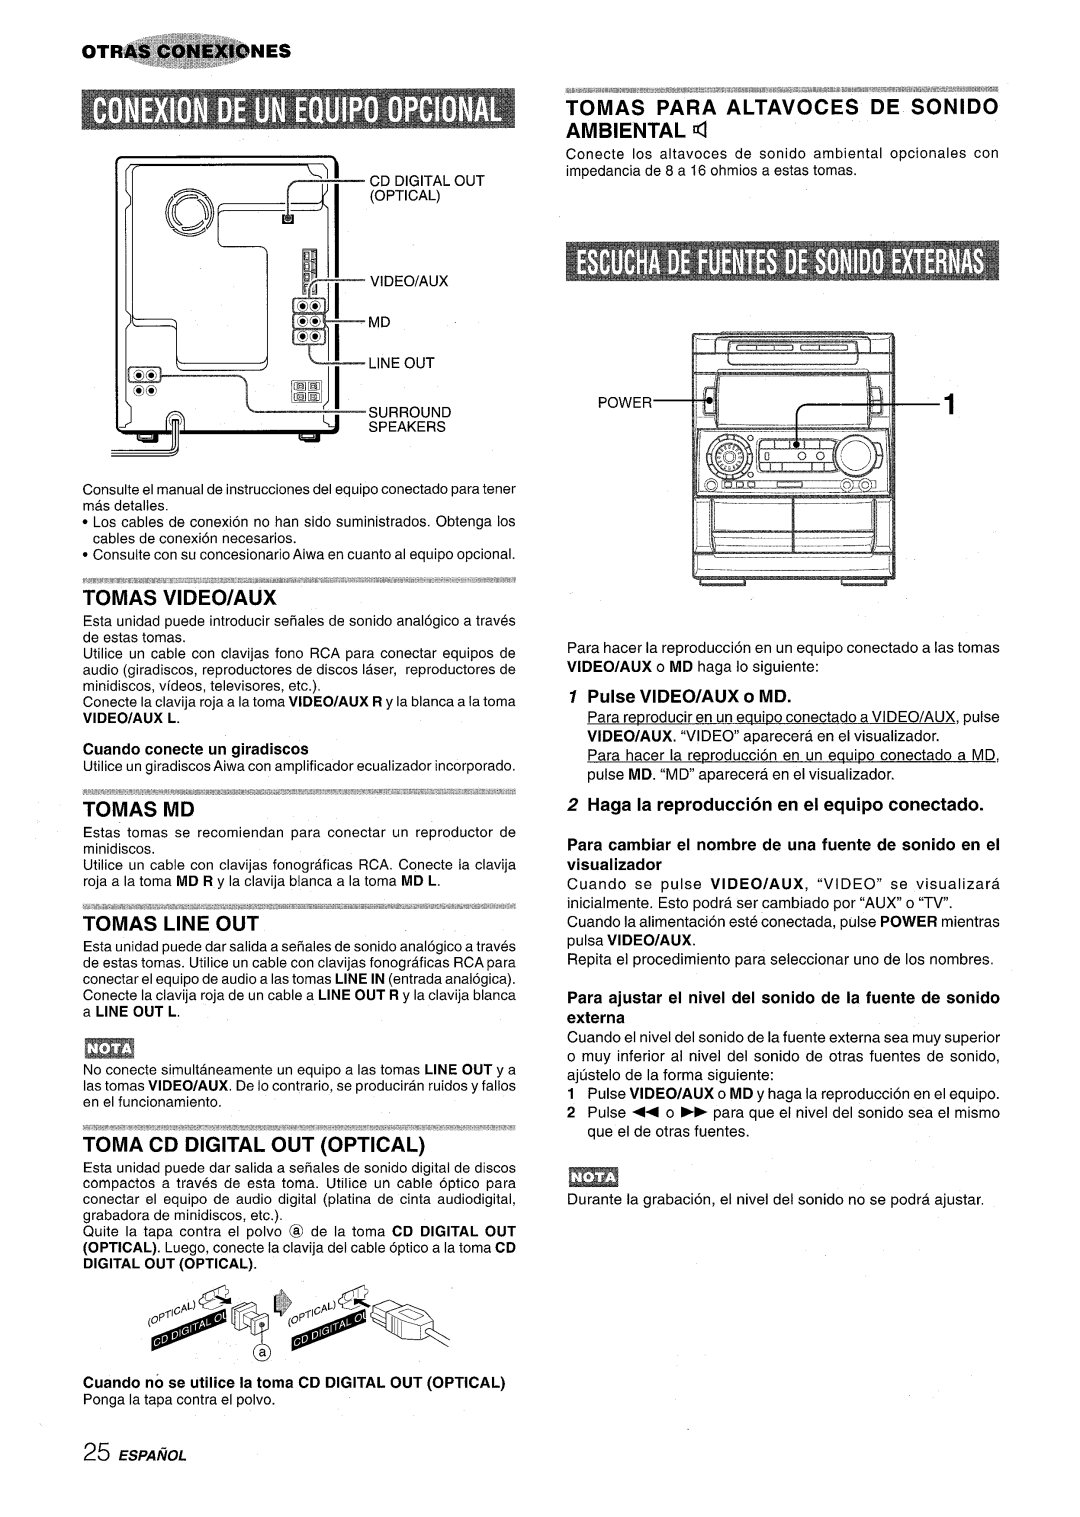 Aiwa NSX-A909 manual Tomas Video/Aux, Toma Cd Digital Out Optical, Tomas Line Out, Pulse VIDEO/AUX o MD, Espanol 